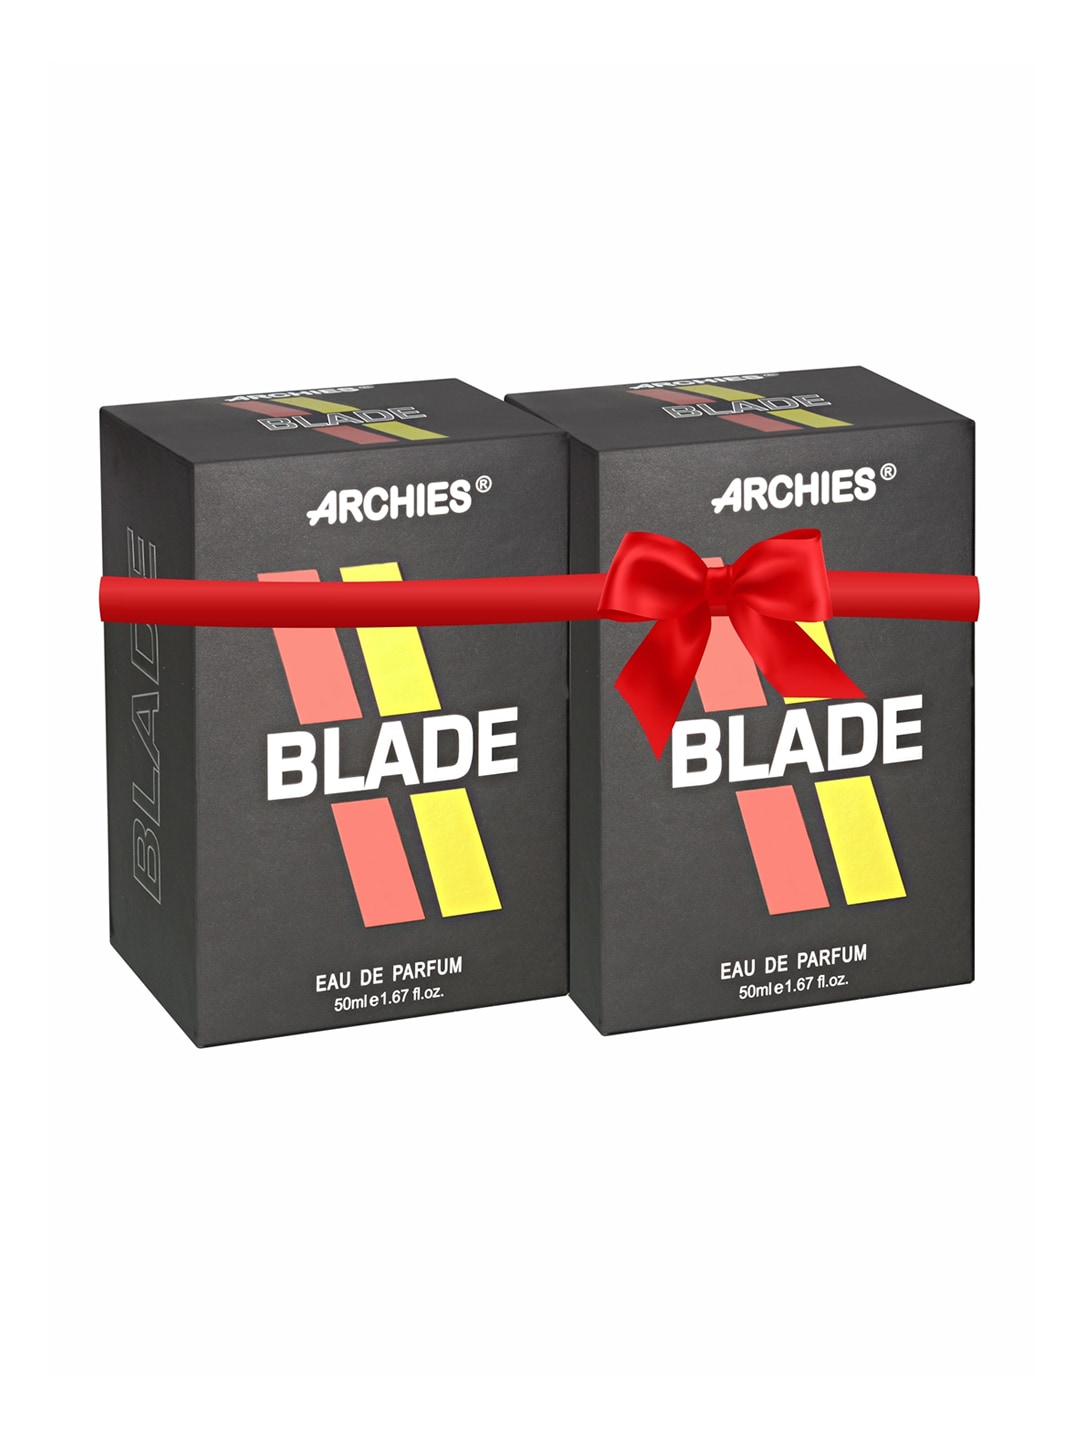 Archies Set of 2 Blade Eau de Parfum - 50ml each Price in India